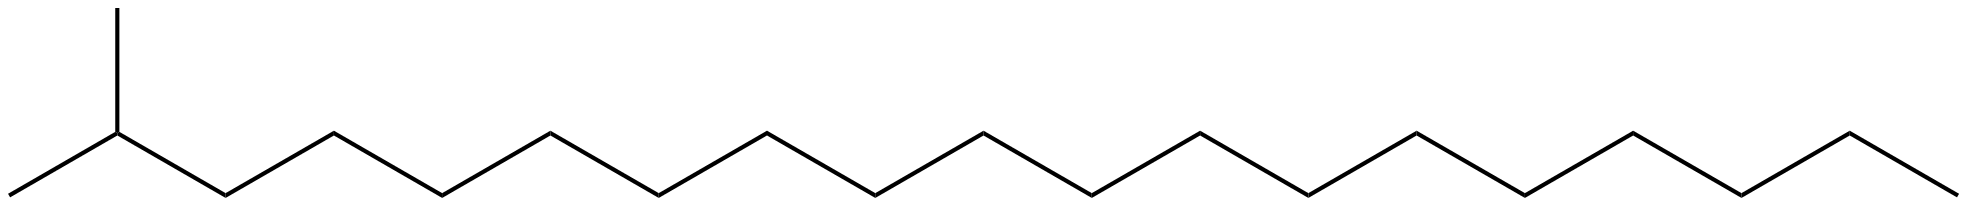 Image of 2-methylnonadecane